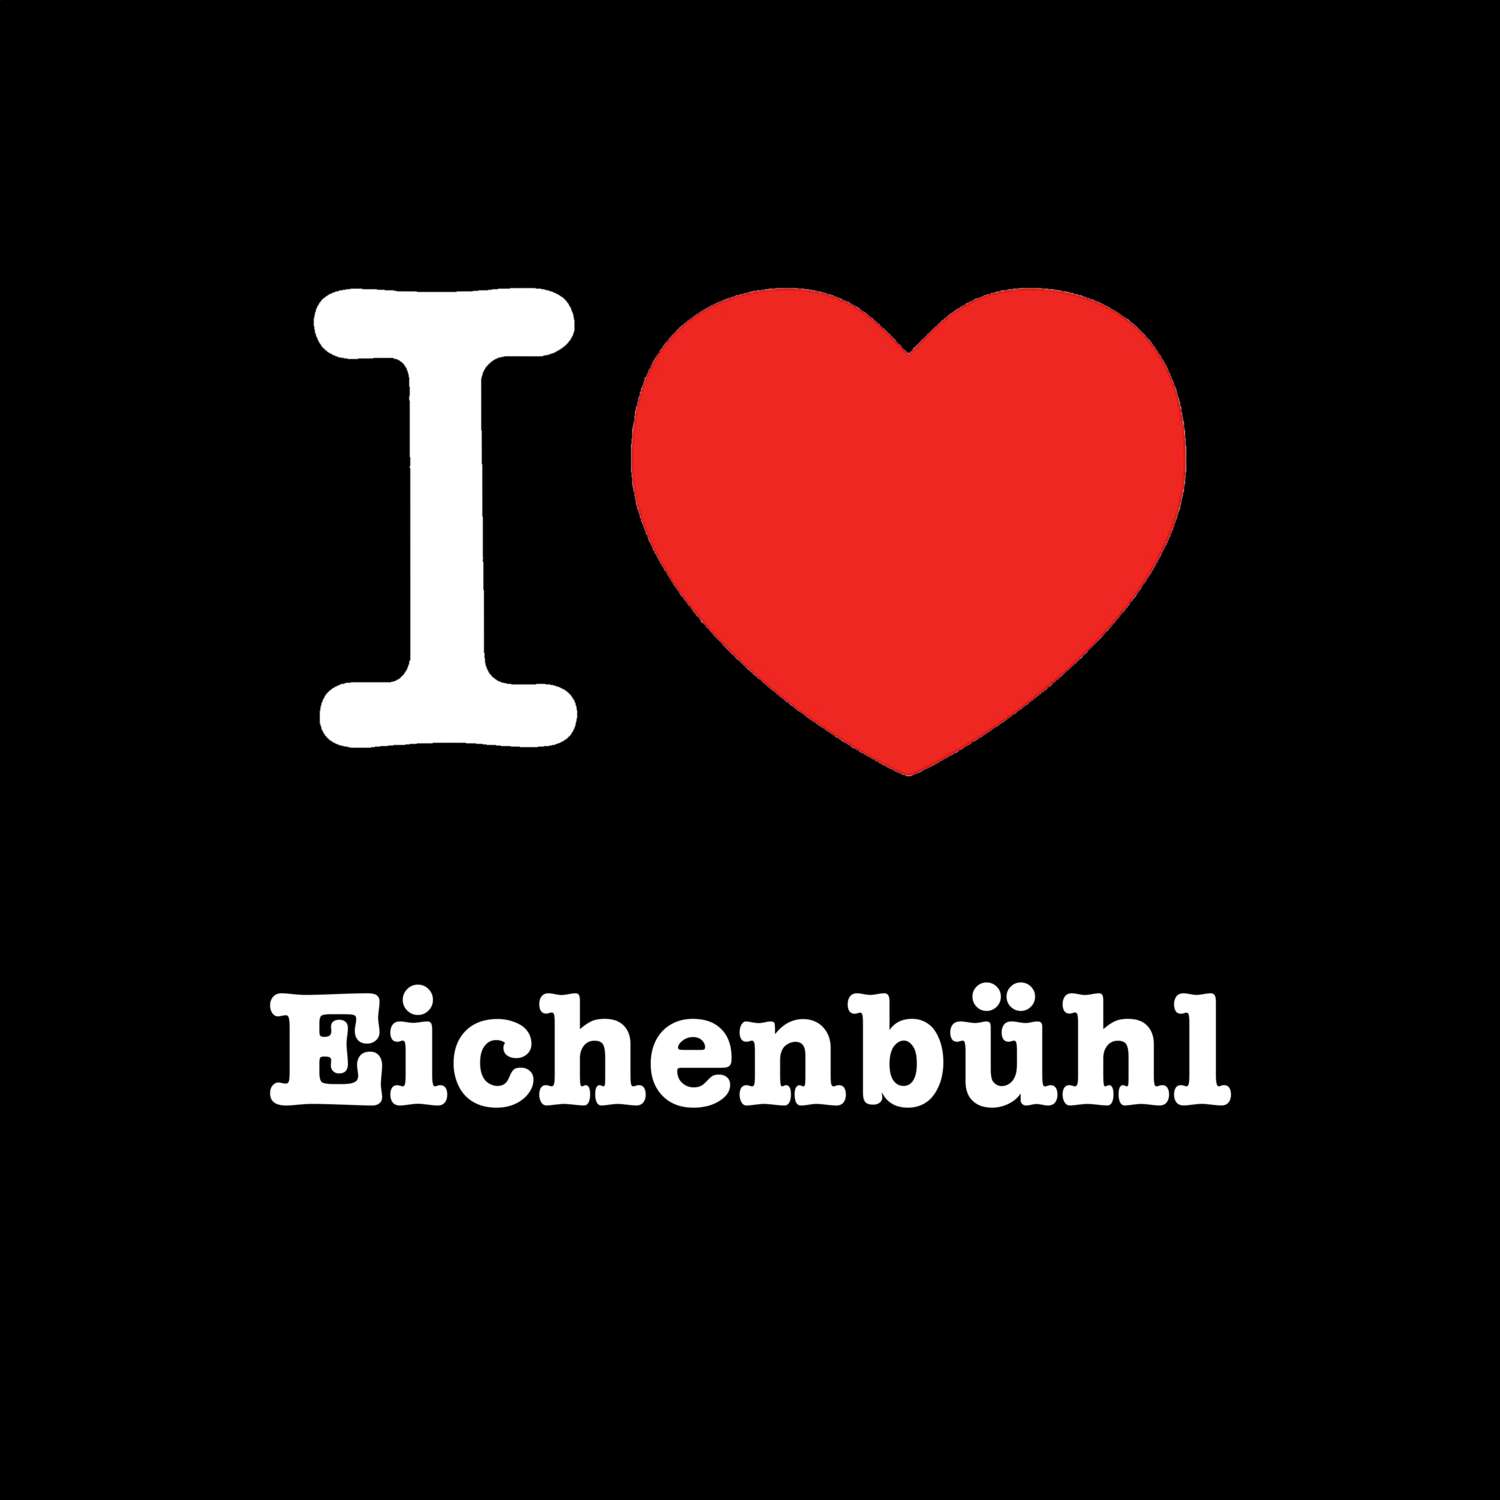 Eichenbühl T-Shirt »I love«